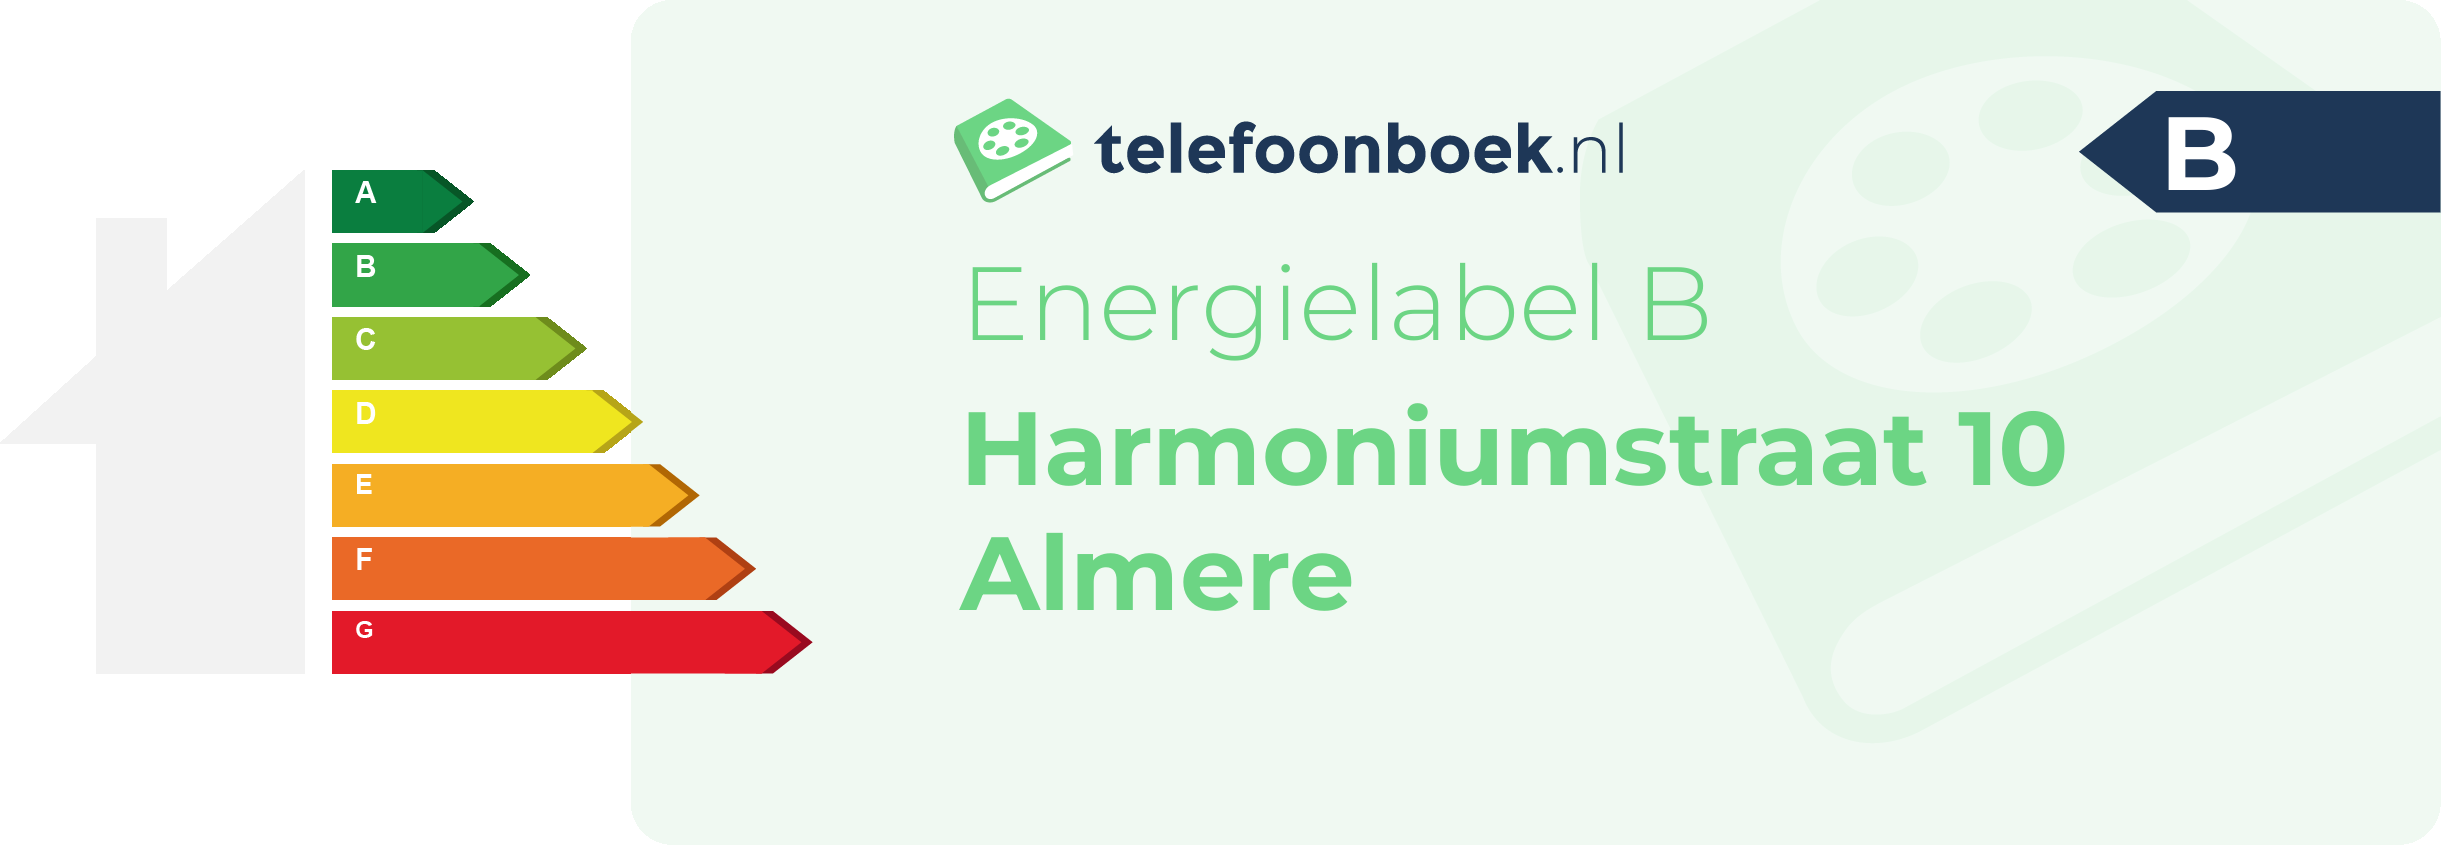 Energielabel Harmoniumstraat 10 Almere